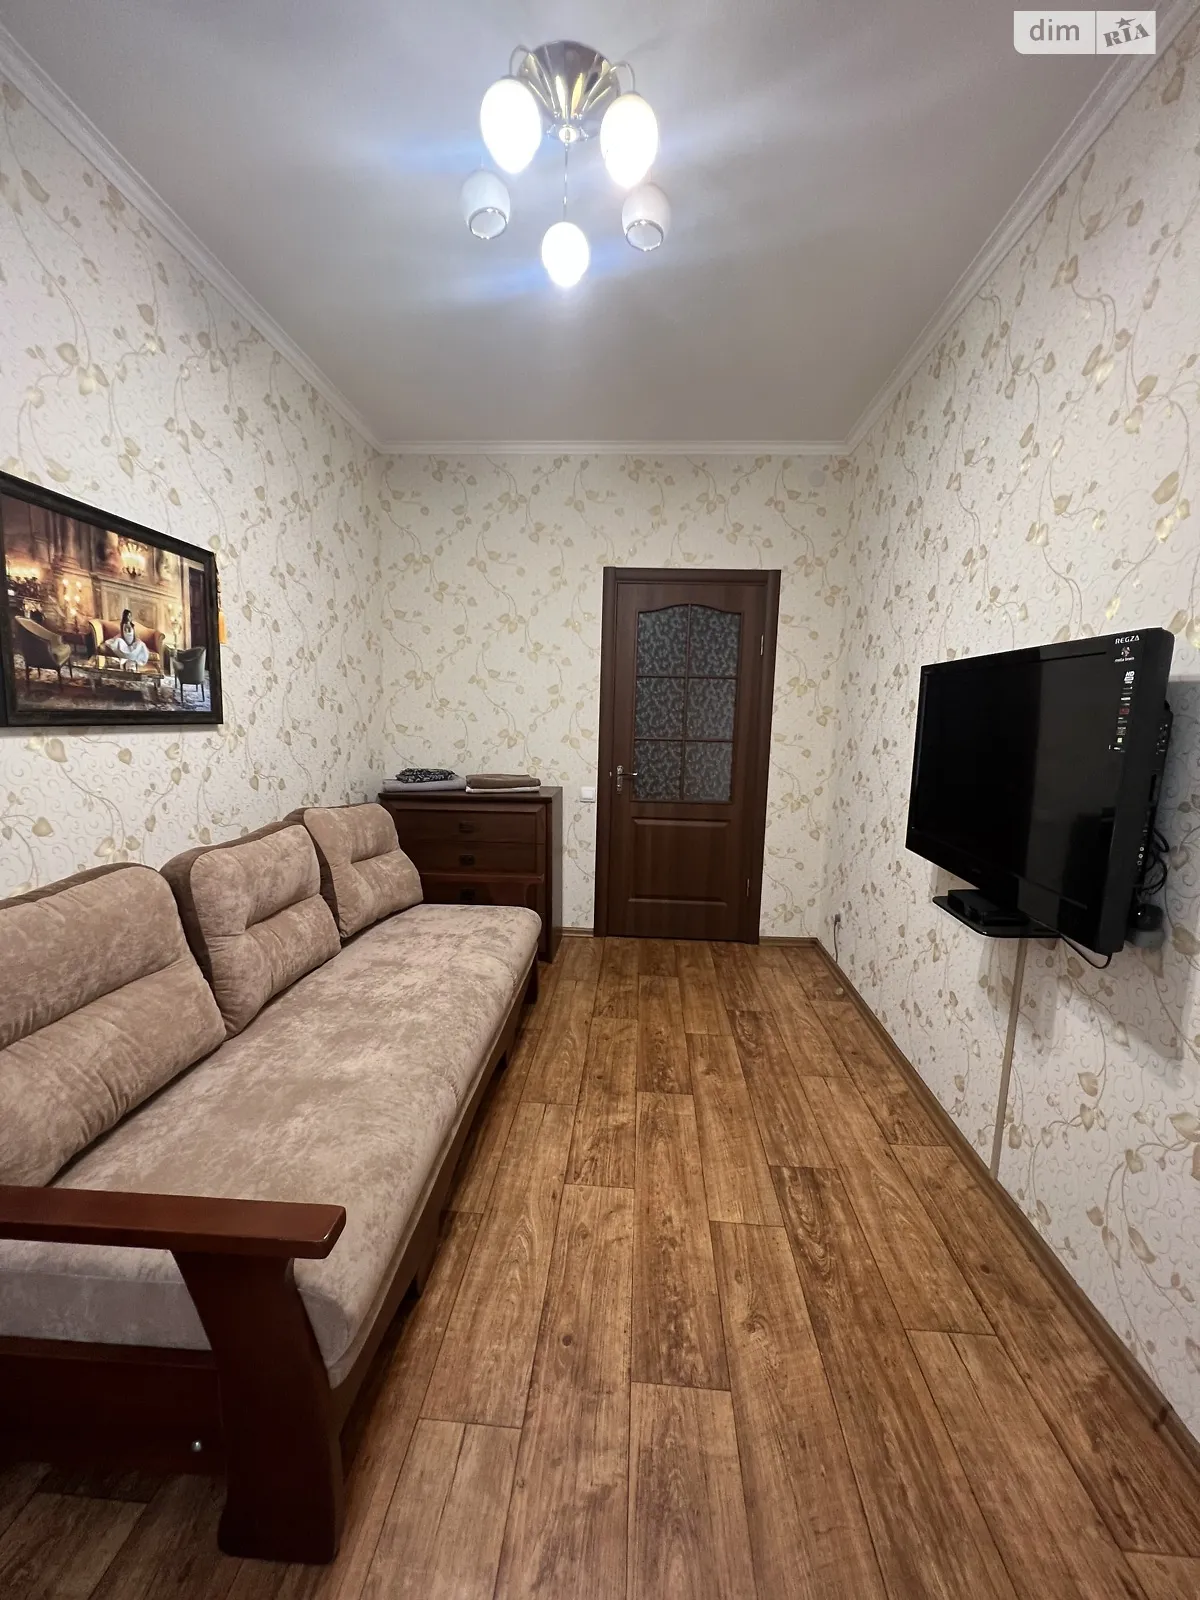 1-комнатная квартира 26.24 кв. м в Запорожье, просп. Металлургов, 22 - фото 1